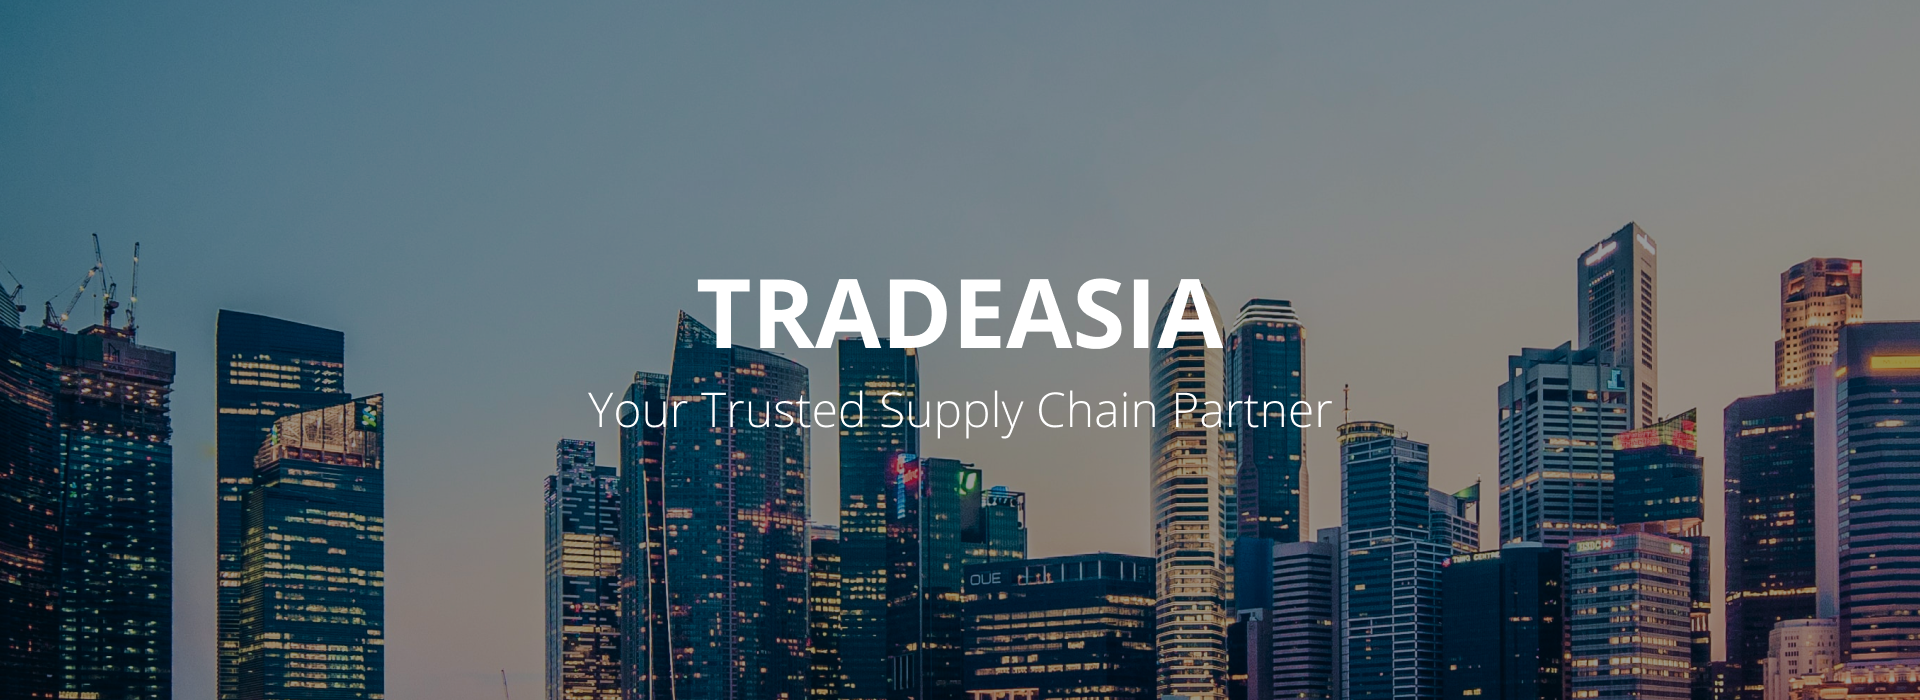 Tradeasia-Company-Image-Website